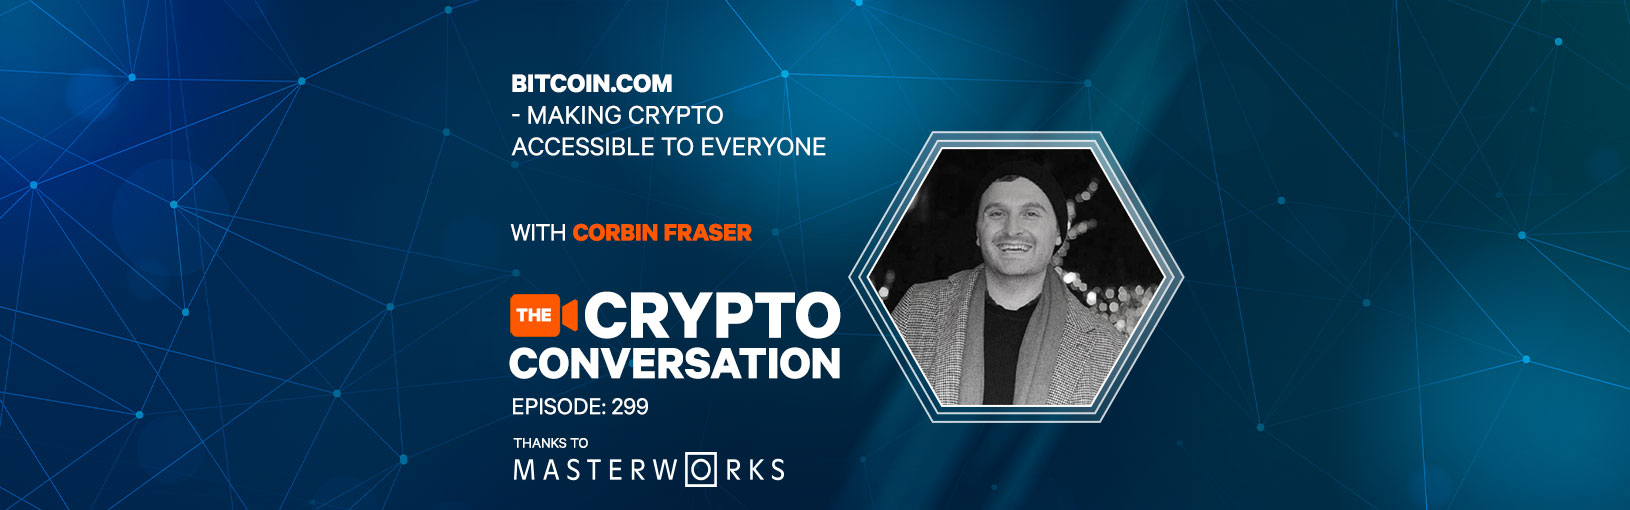 Bitcoin.com – Making crypto accessible to everyone